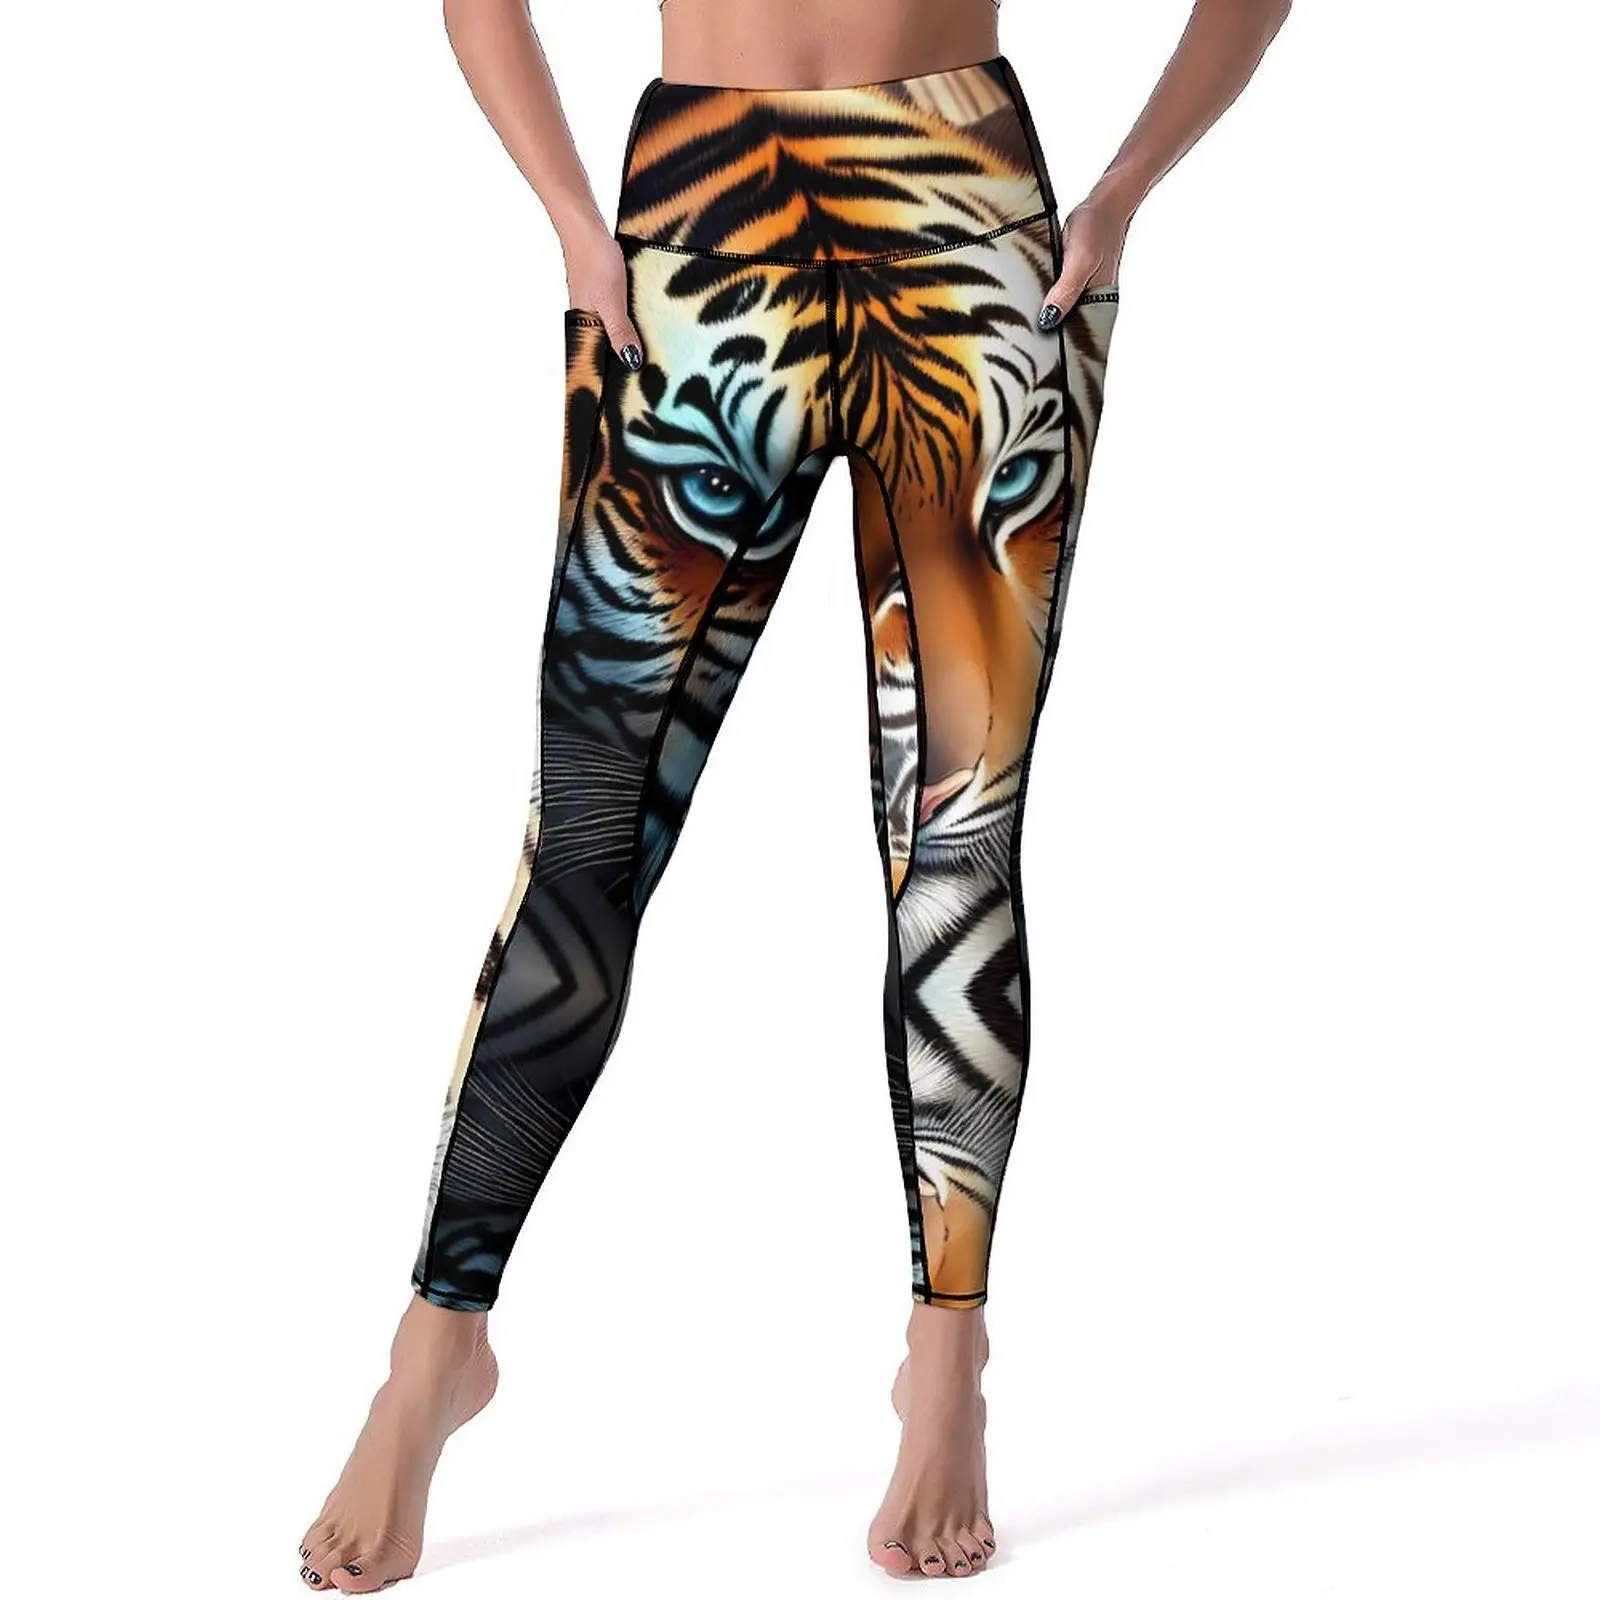 

Caspian Tiger Yoga Pants Sexy Big Cat Print Graphic Leggings Push Up Fitness Gym Leggins Women Vintage Stretchy Sports Tights